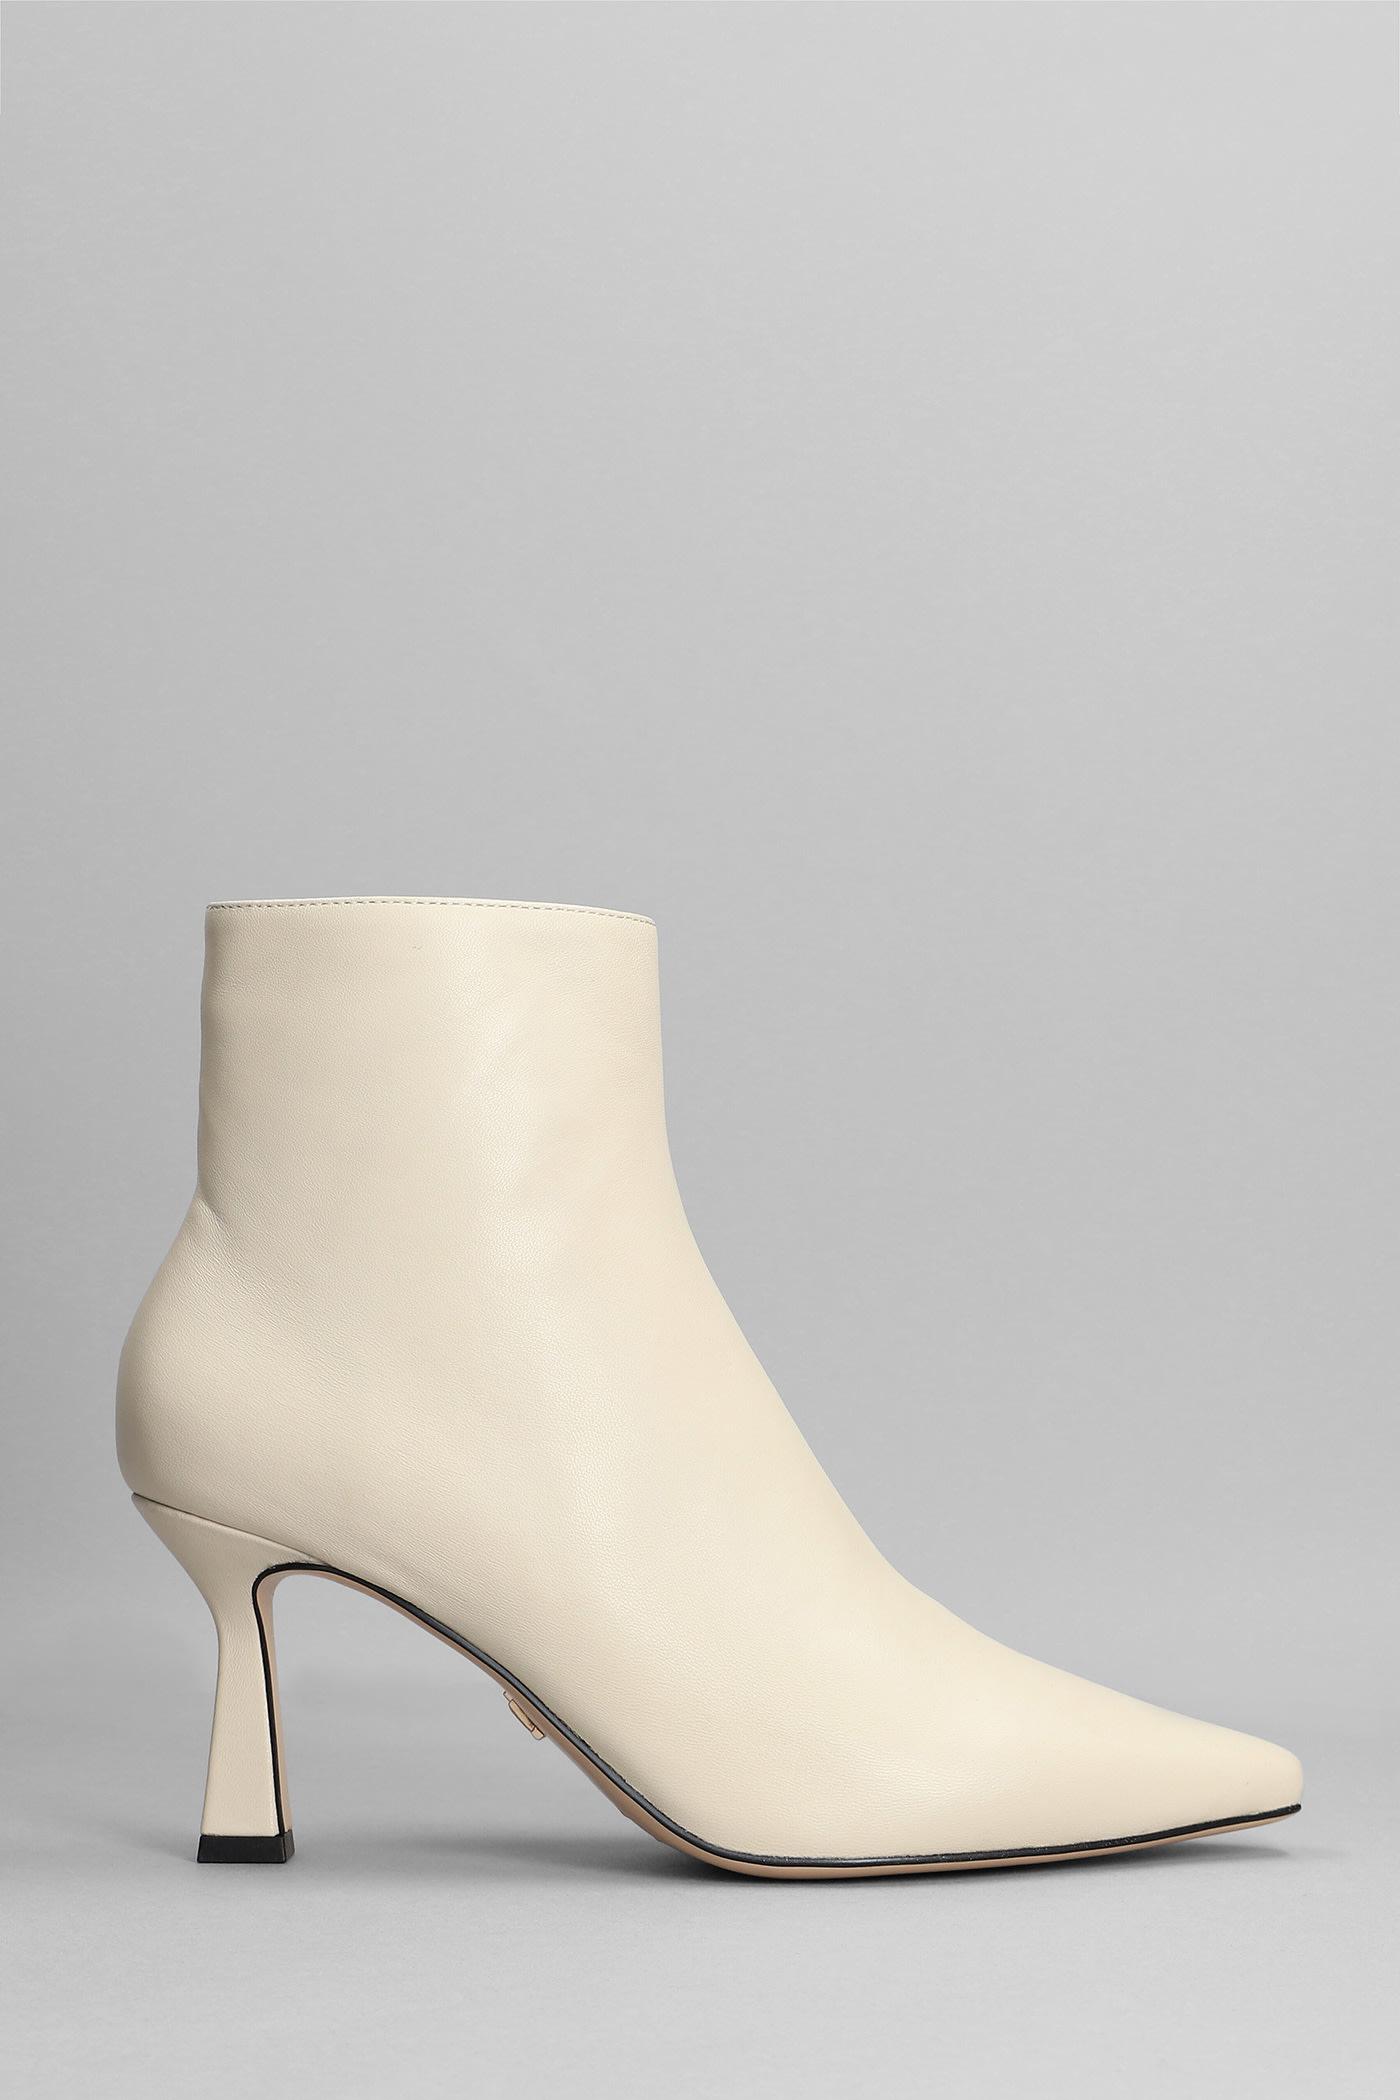 Kerel alliantie residentie Lola Cruz High Heels Ankle Boots In White Leather | Lyst